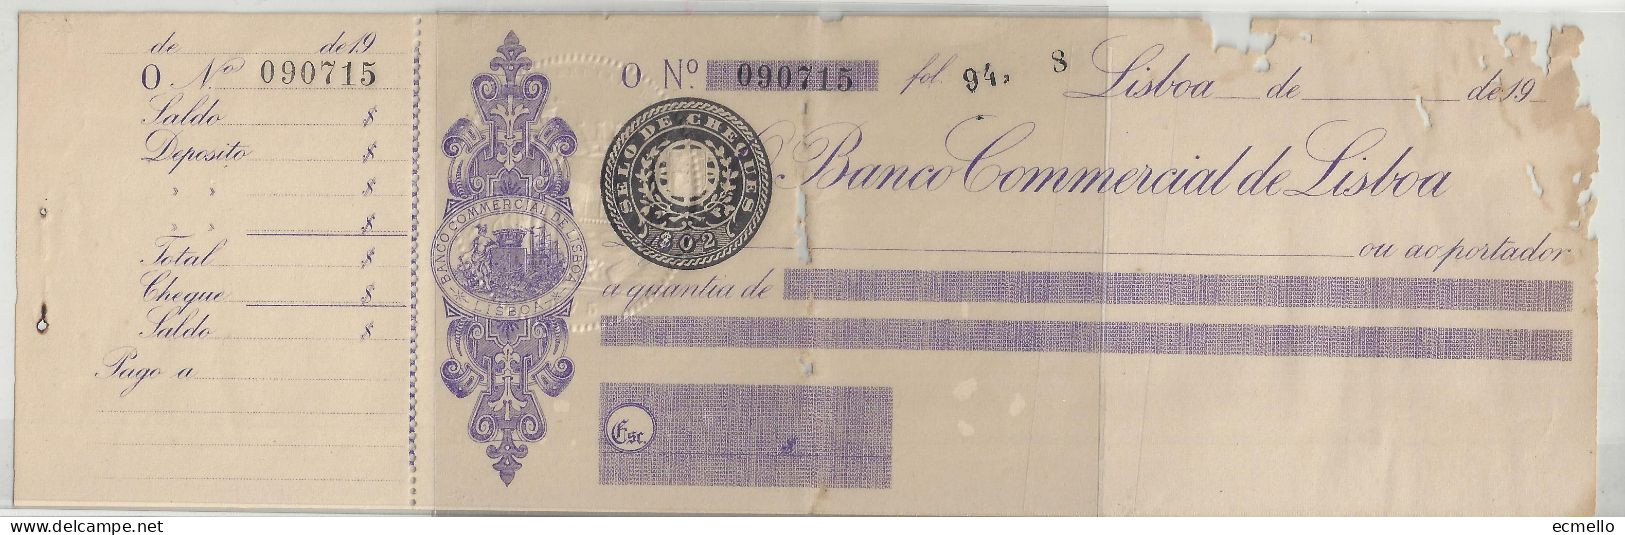 PORTUGAL CHEQUE CHECK BANCO COMERCIAL DE LISBOA 1910'S SCARCE - Cheques & Traveler's Cheques